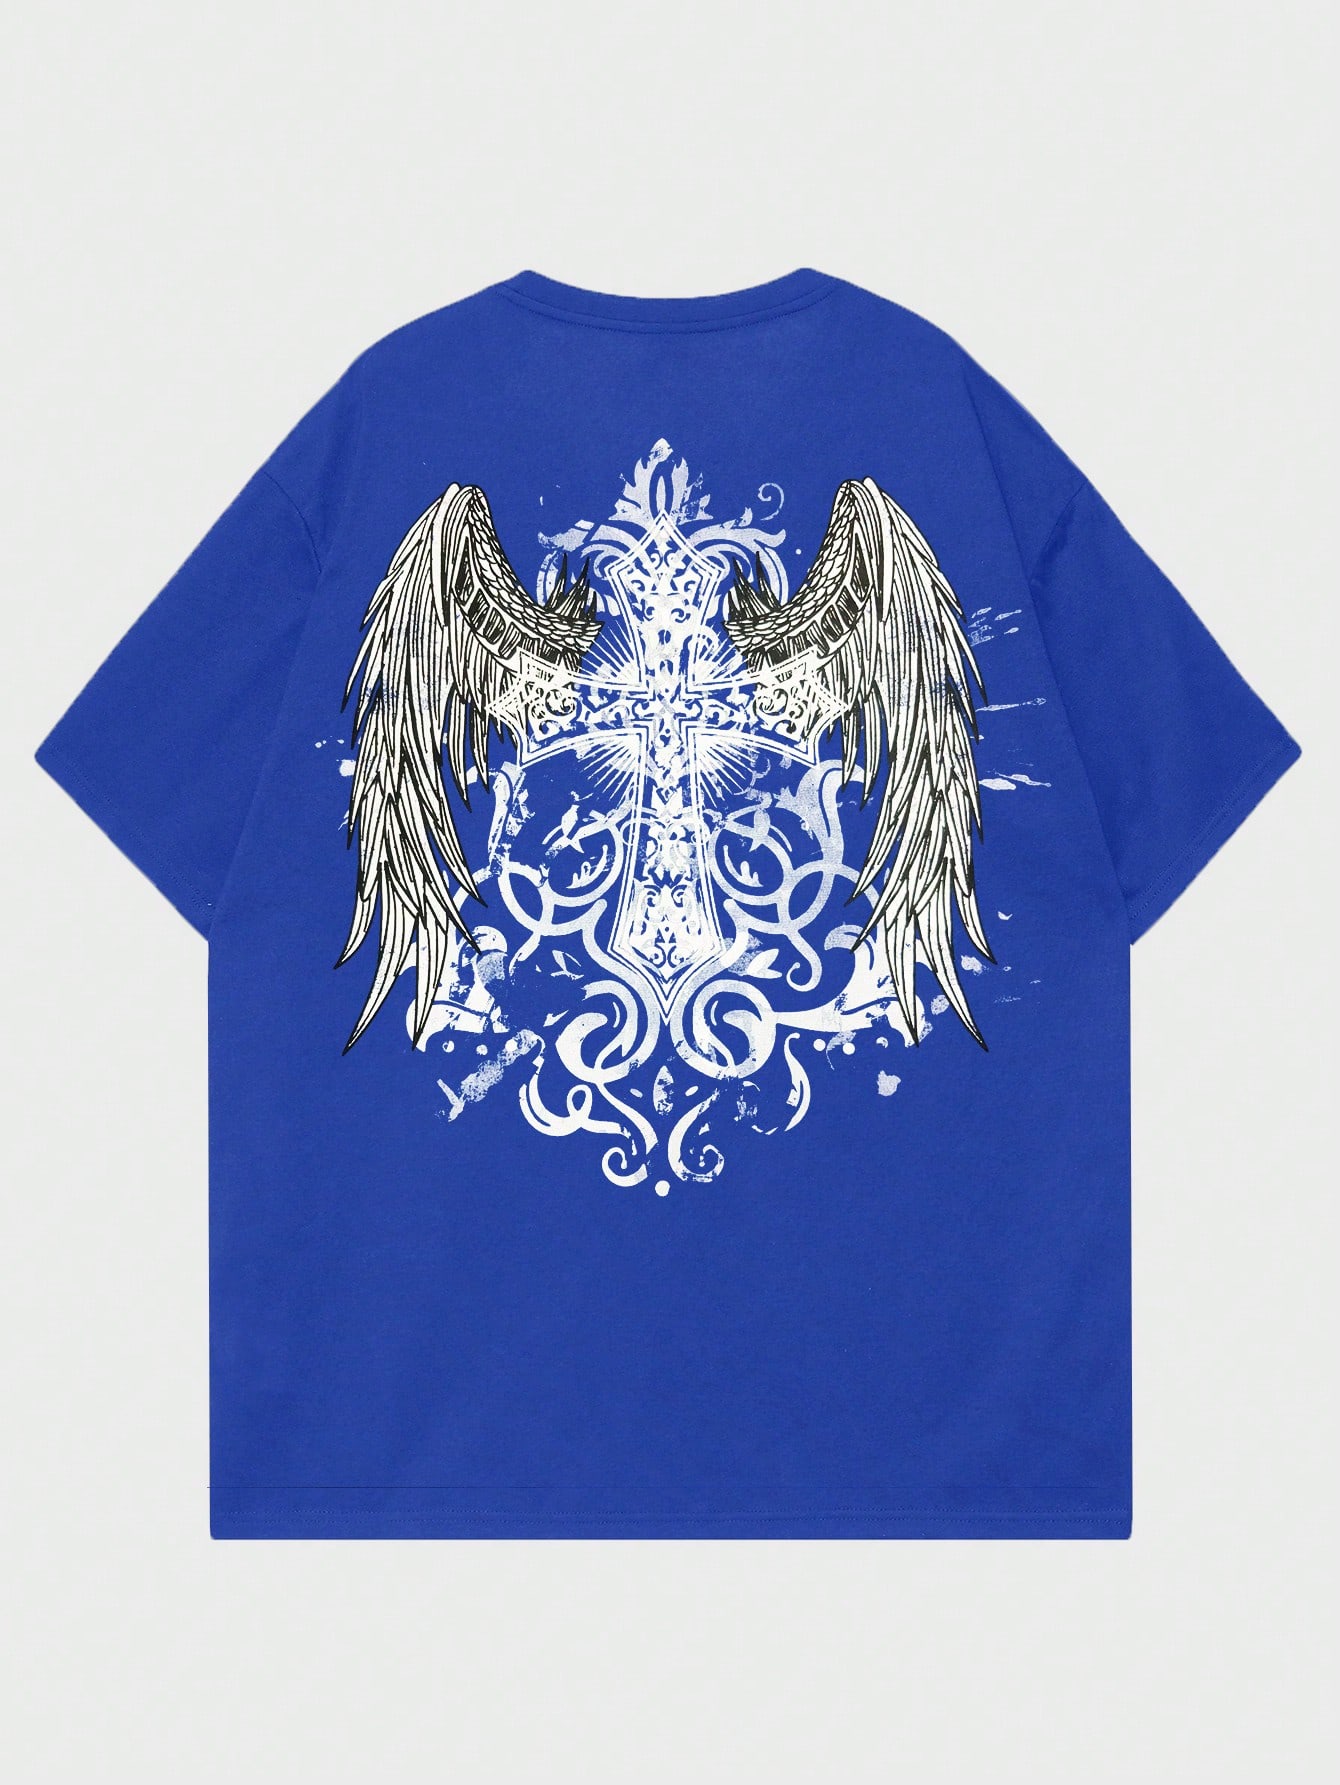 ROMWE Goth Мужская футболка с принтом снежинки и крестом для повседневной жизни, синий пазл winter wings